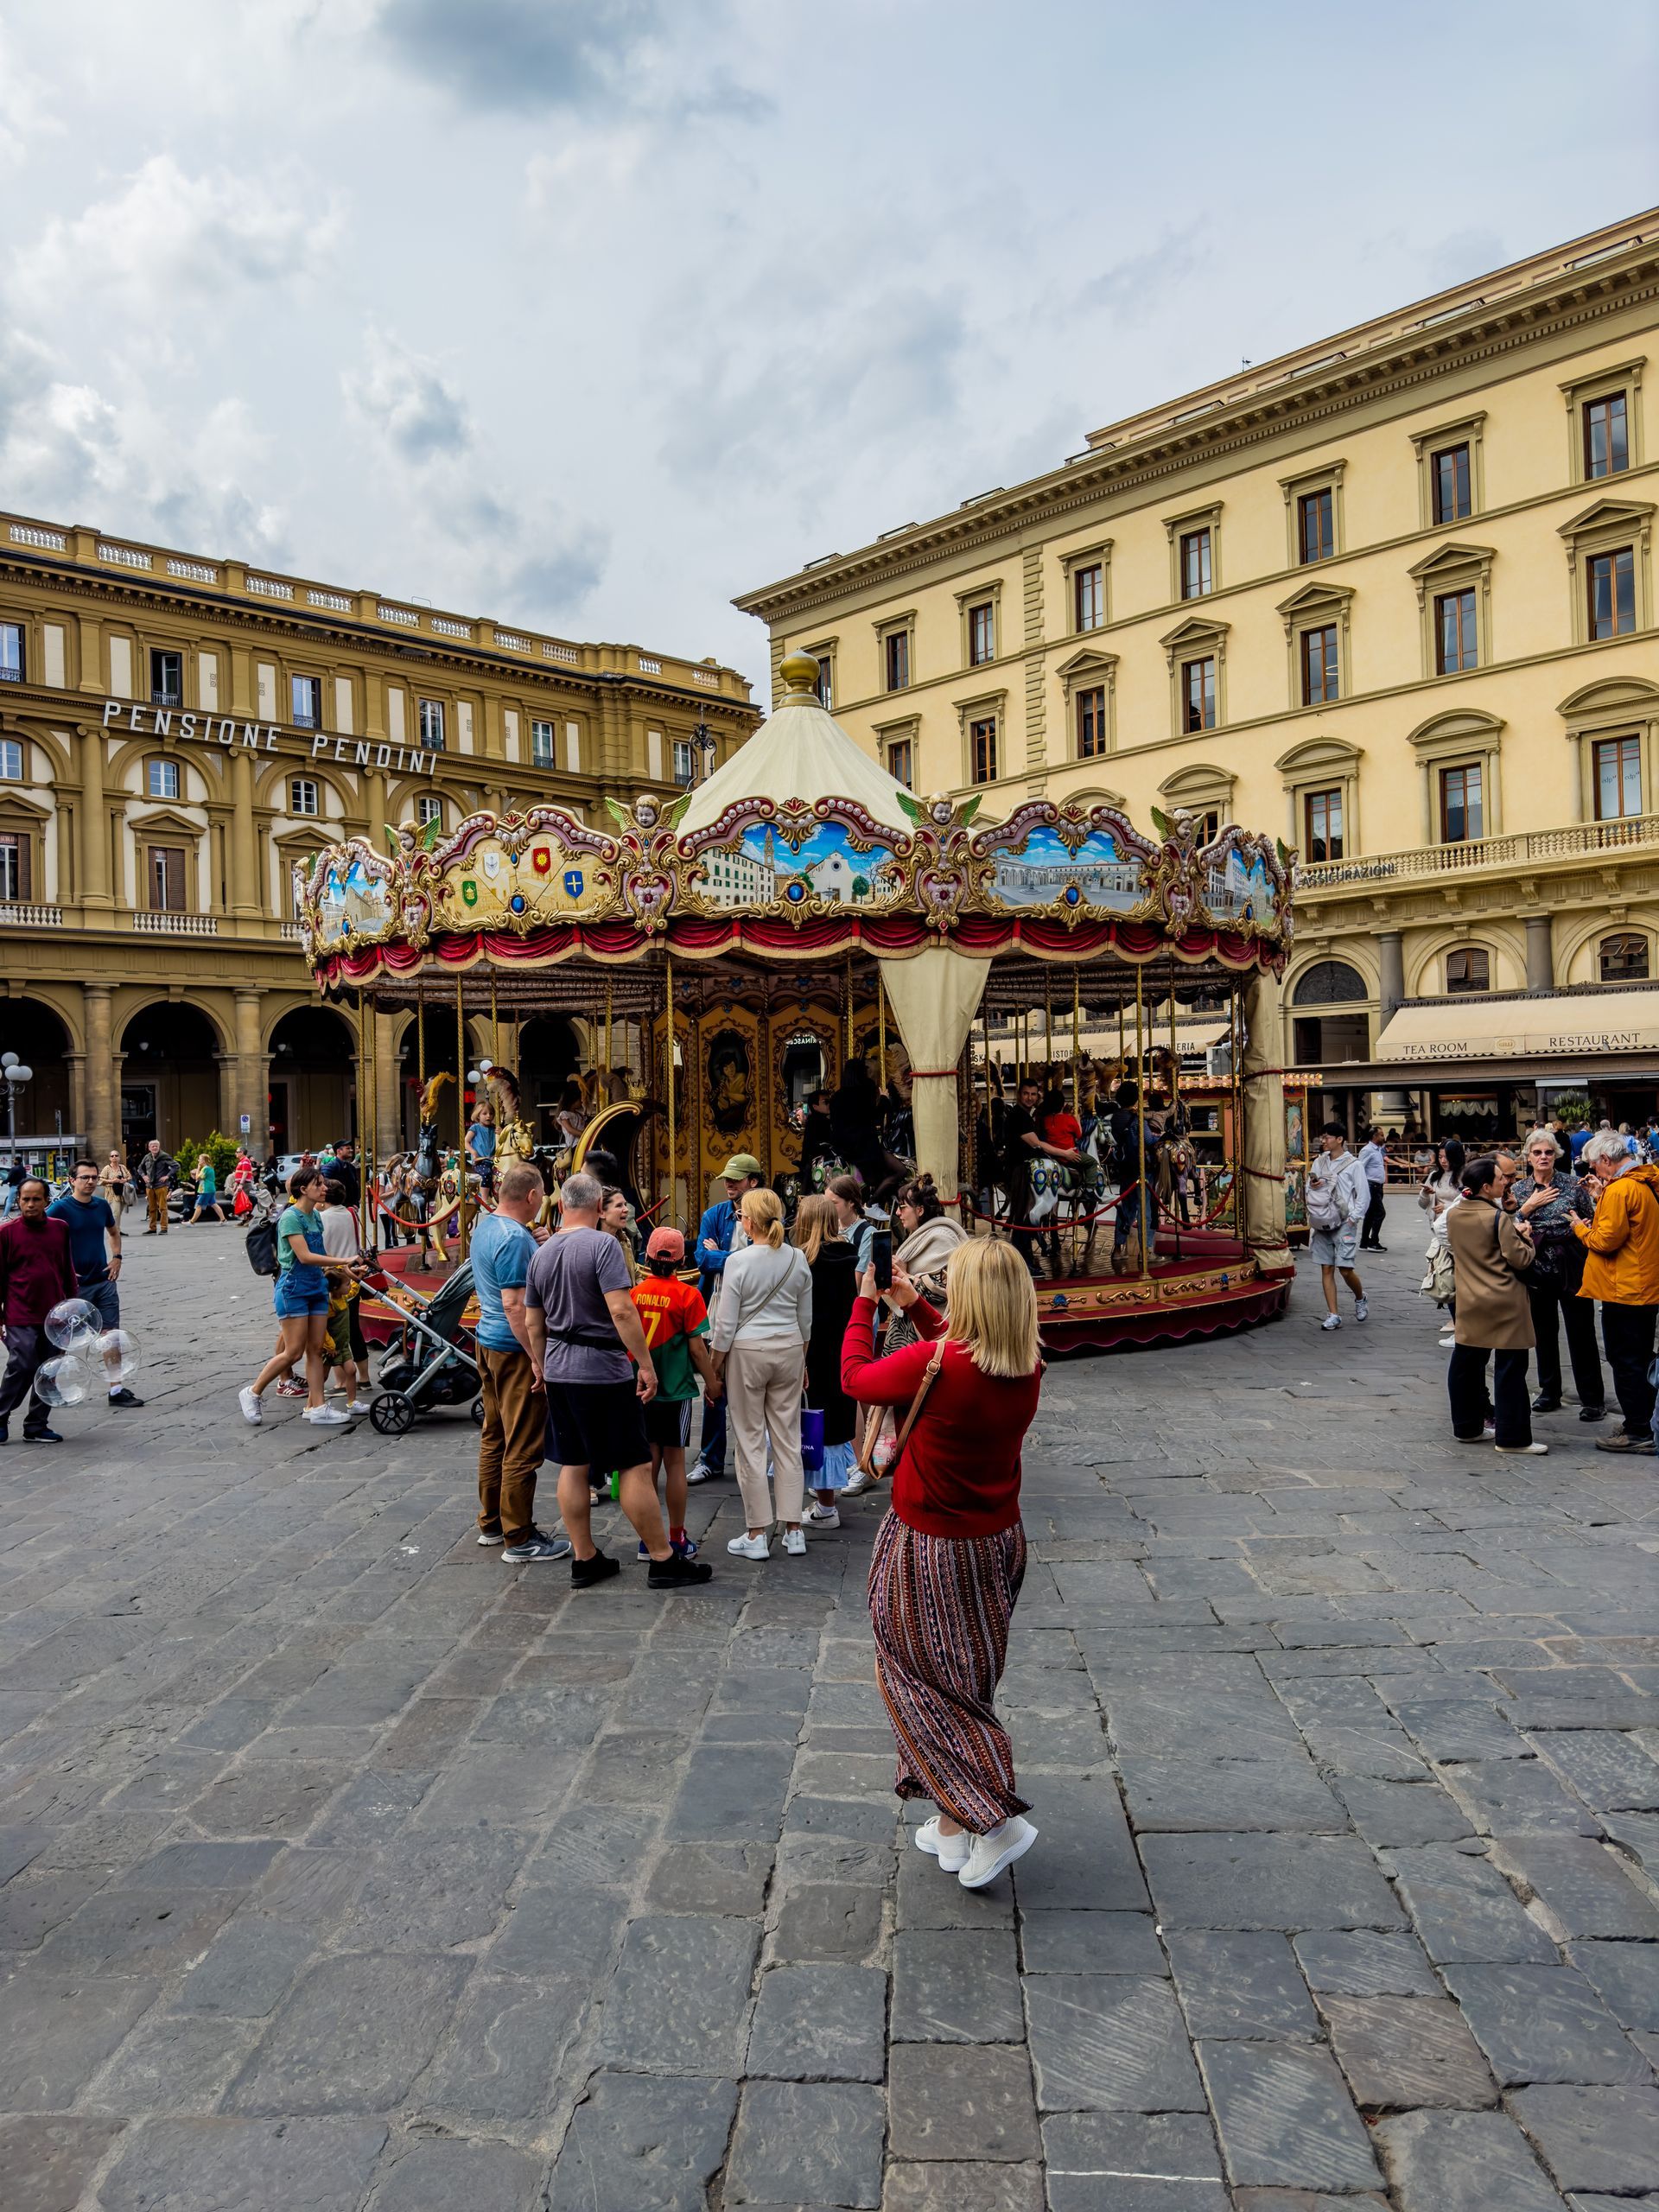 Carrusel Toscano antiguo in Piazza Republica Florence